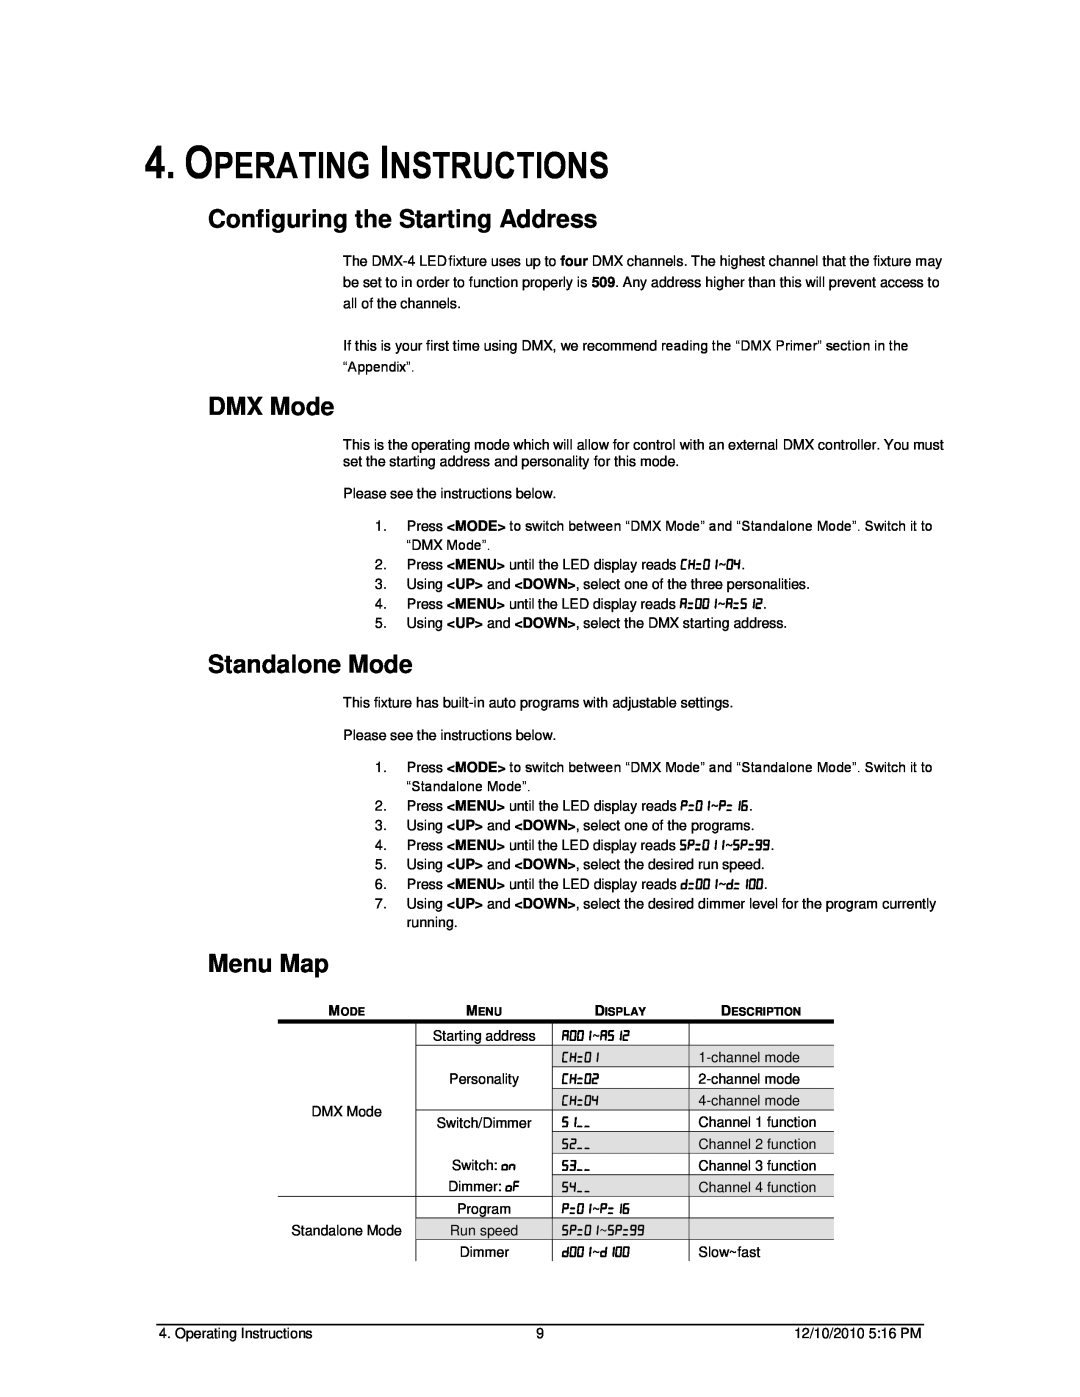 Chauvet DMX-4 LED Operating Instructions, Configuring the Starting Address, DMX Mode, Standalone Mode, Menu Map,  